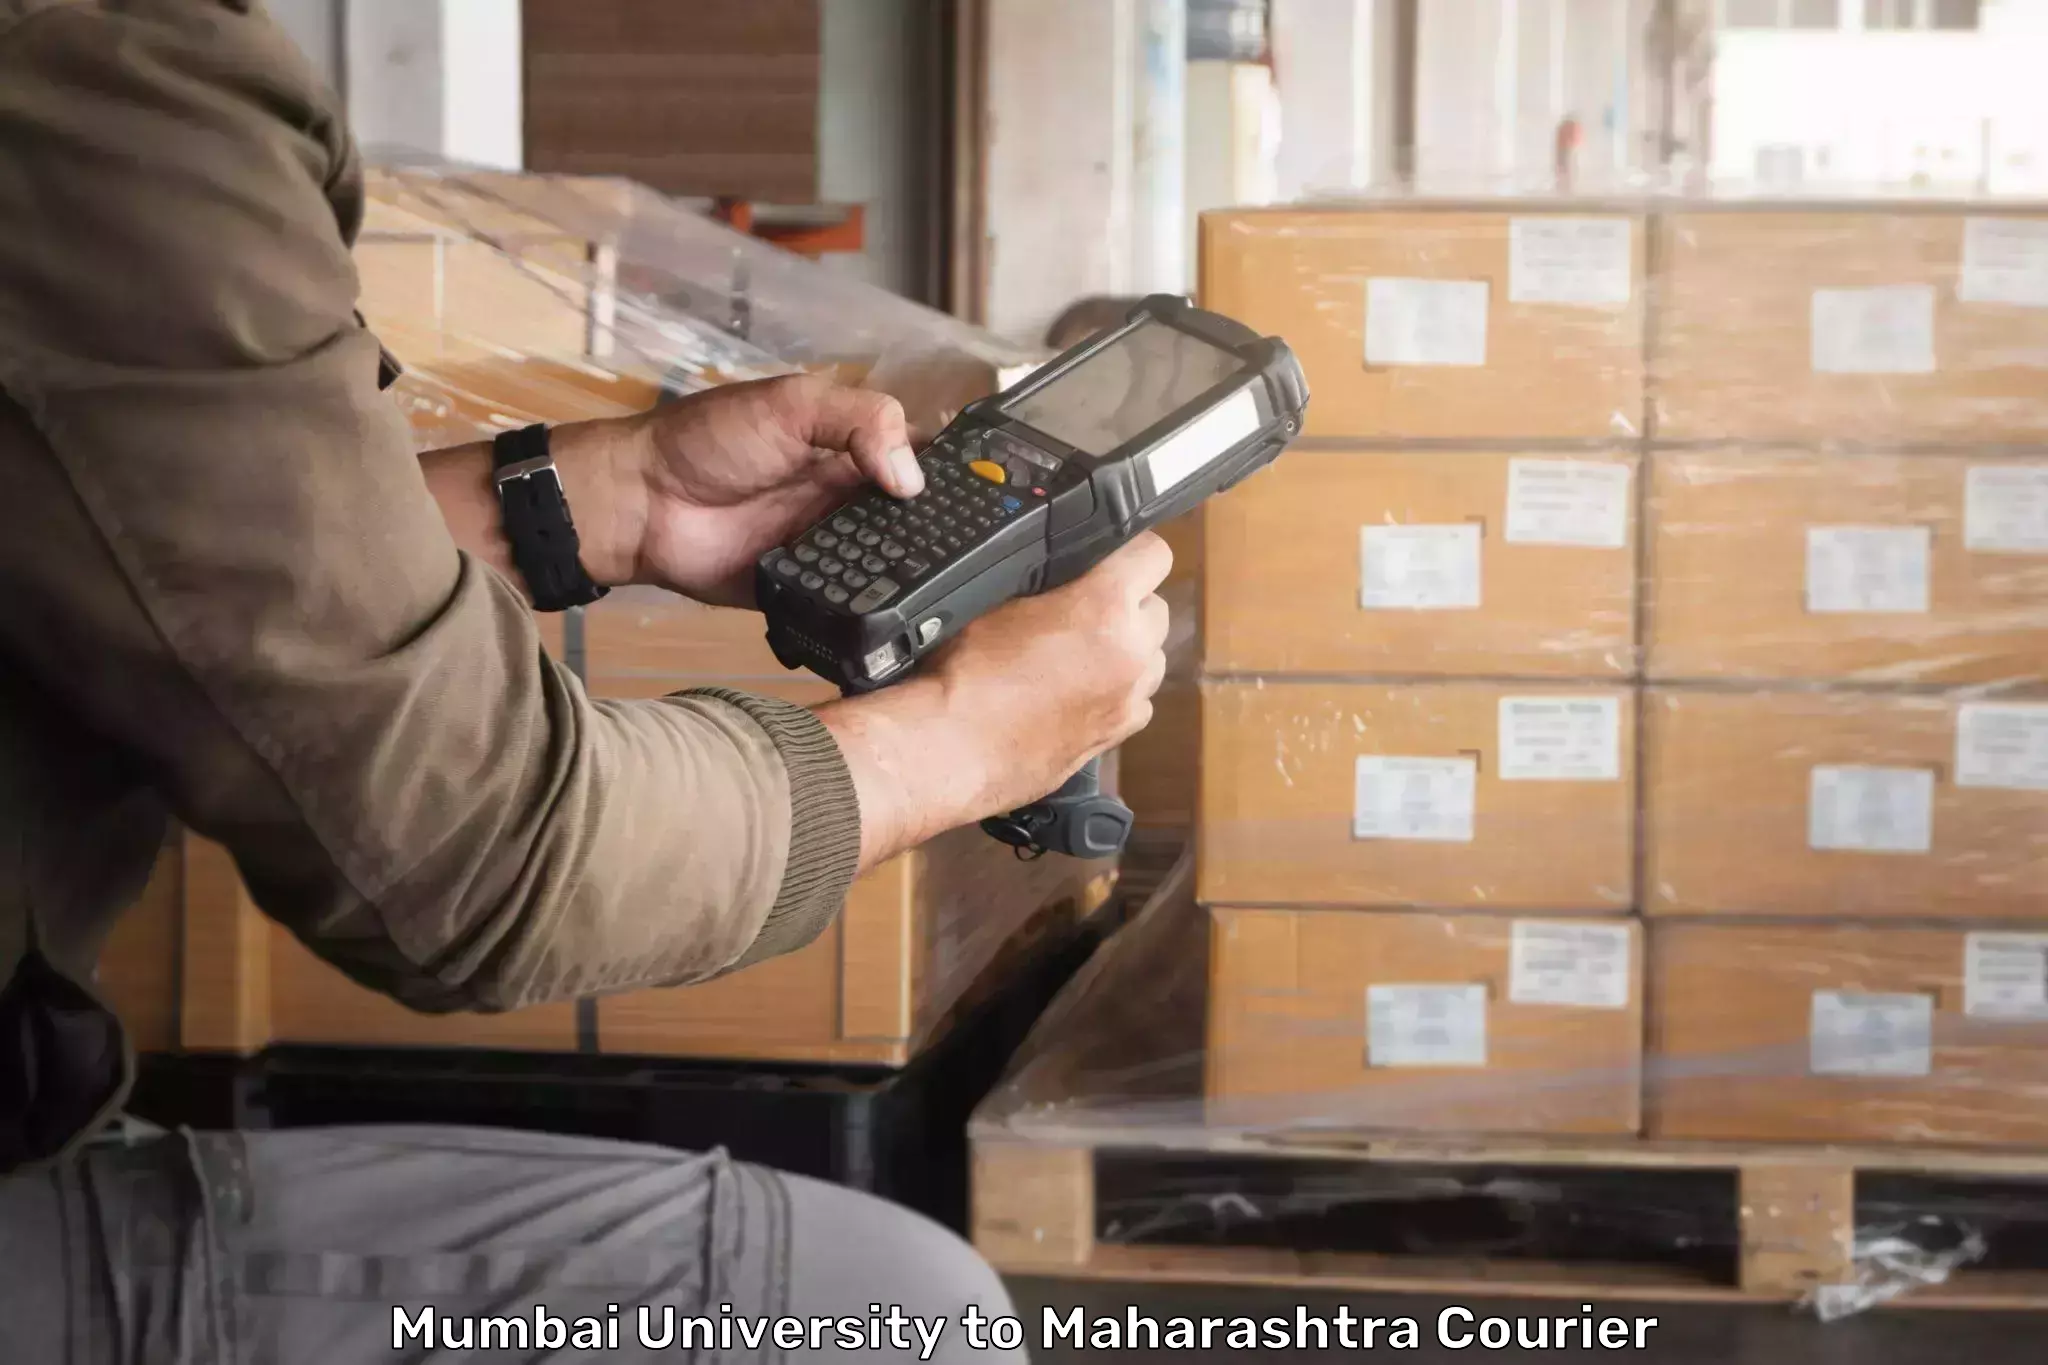 Budget-friendly shipping in Mumbai University to Kopargaon